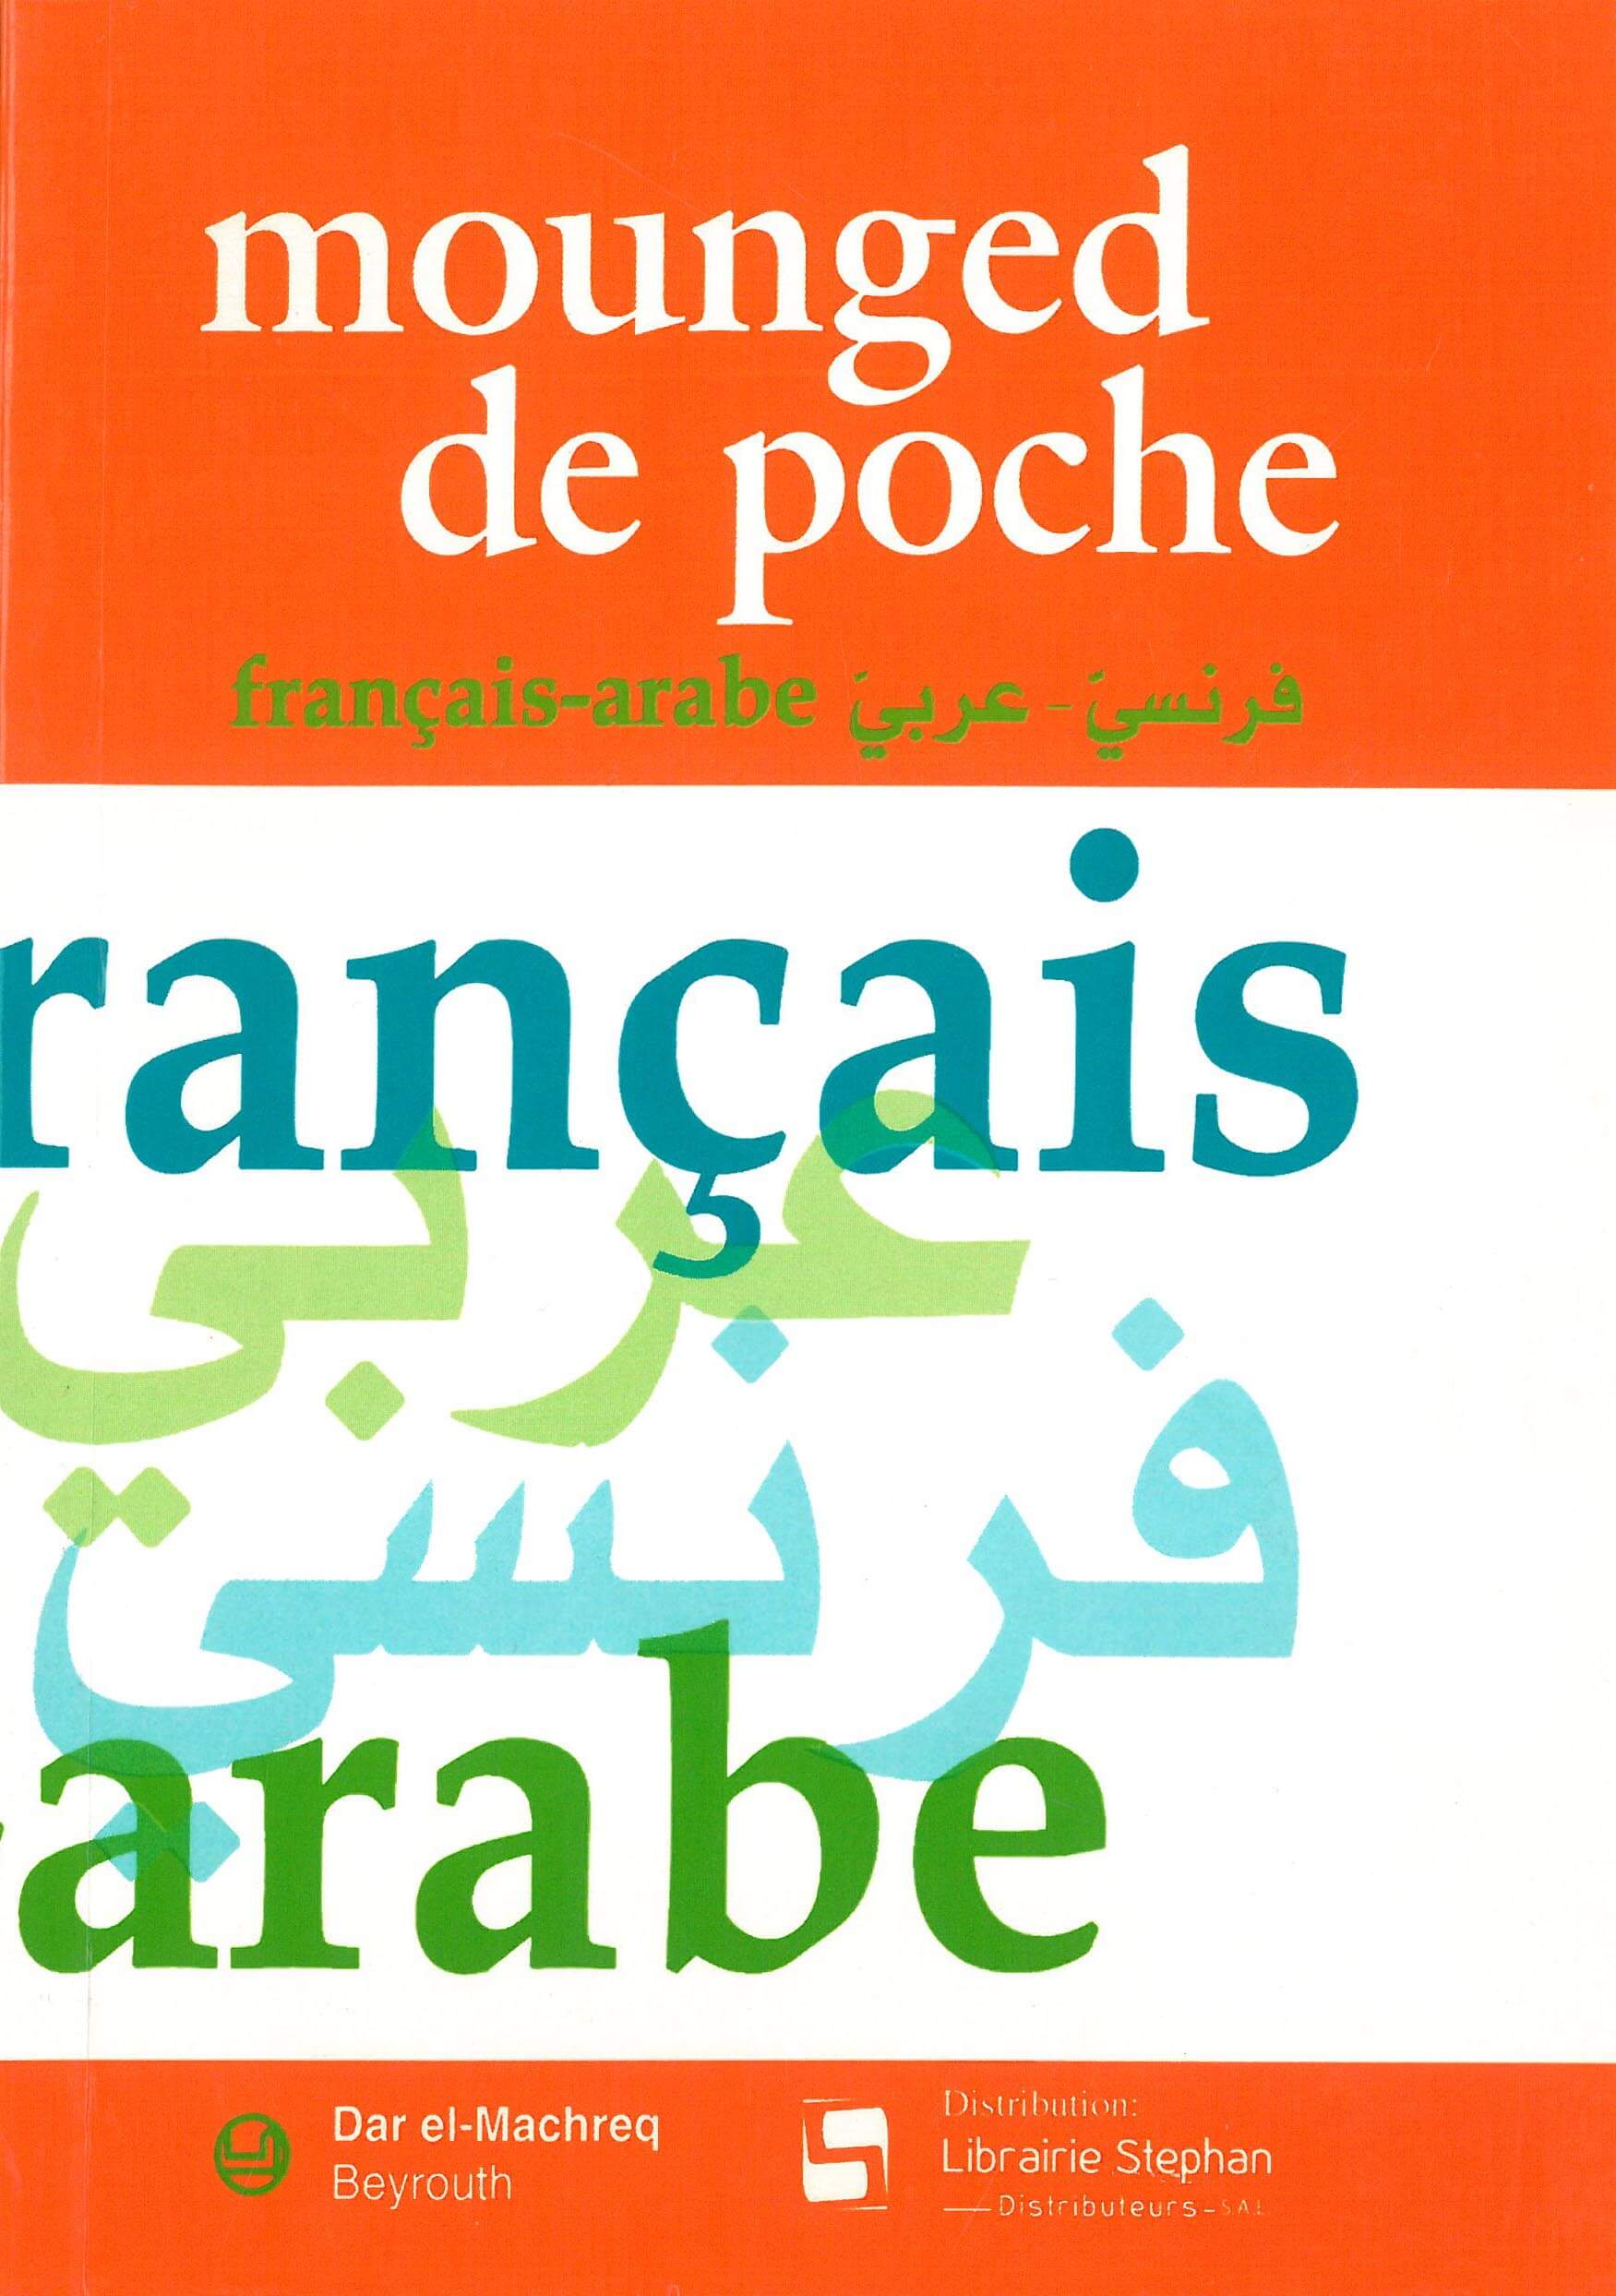 Dictionnaire Mounged de poche français-arabe - منجد الجيب فرنسي/عربي